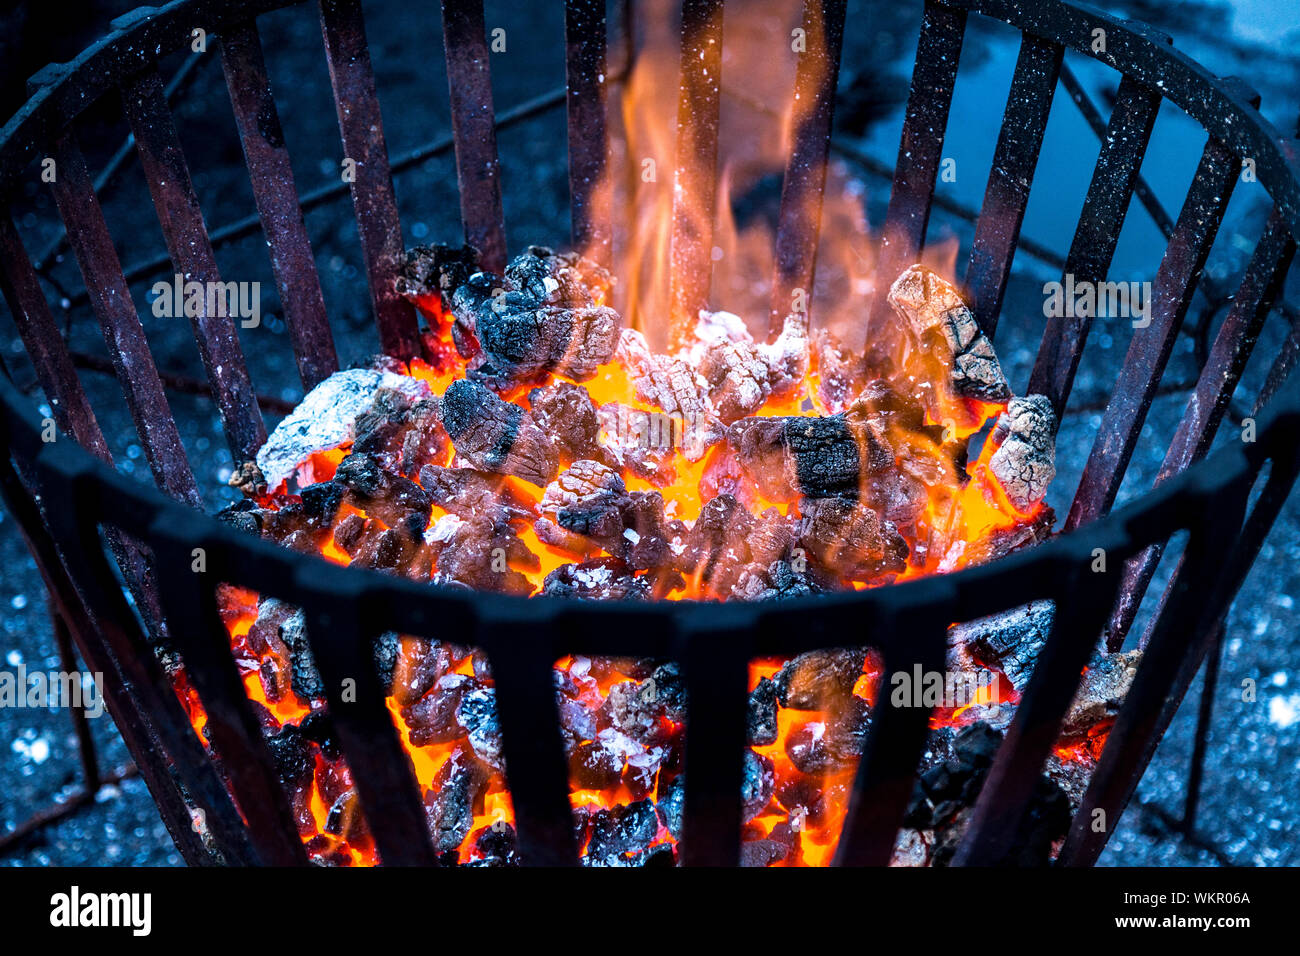 Un feu brûlant chaud charbons dans un panier de feu métallique Banque D'Images